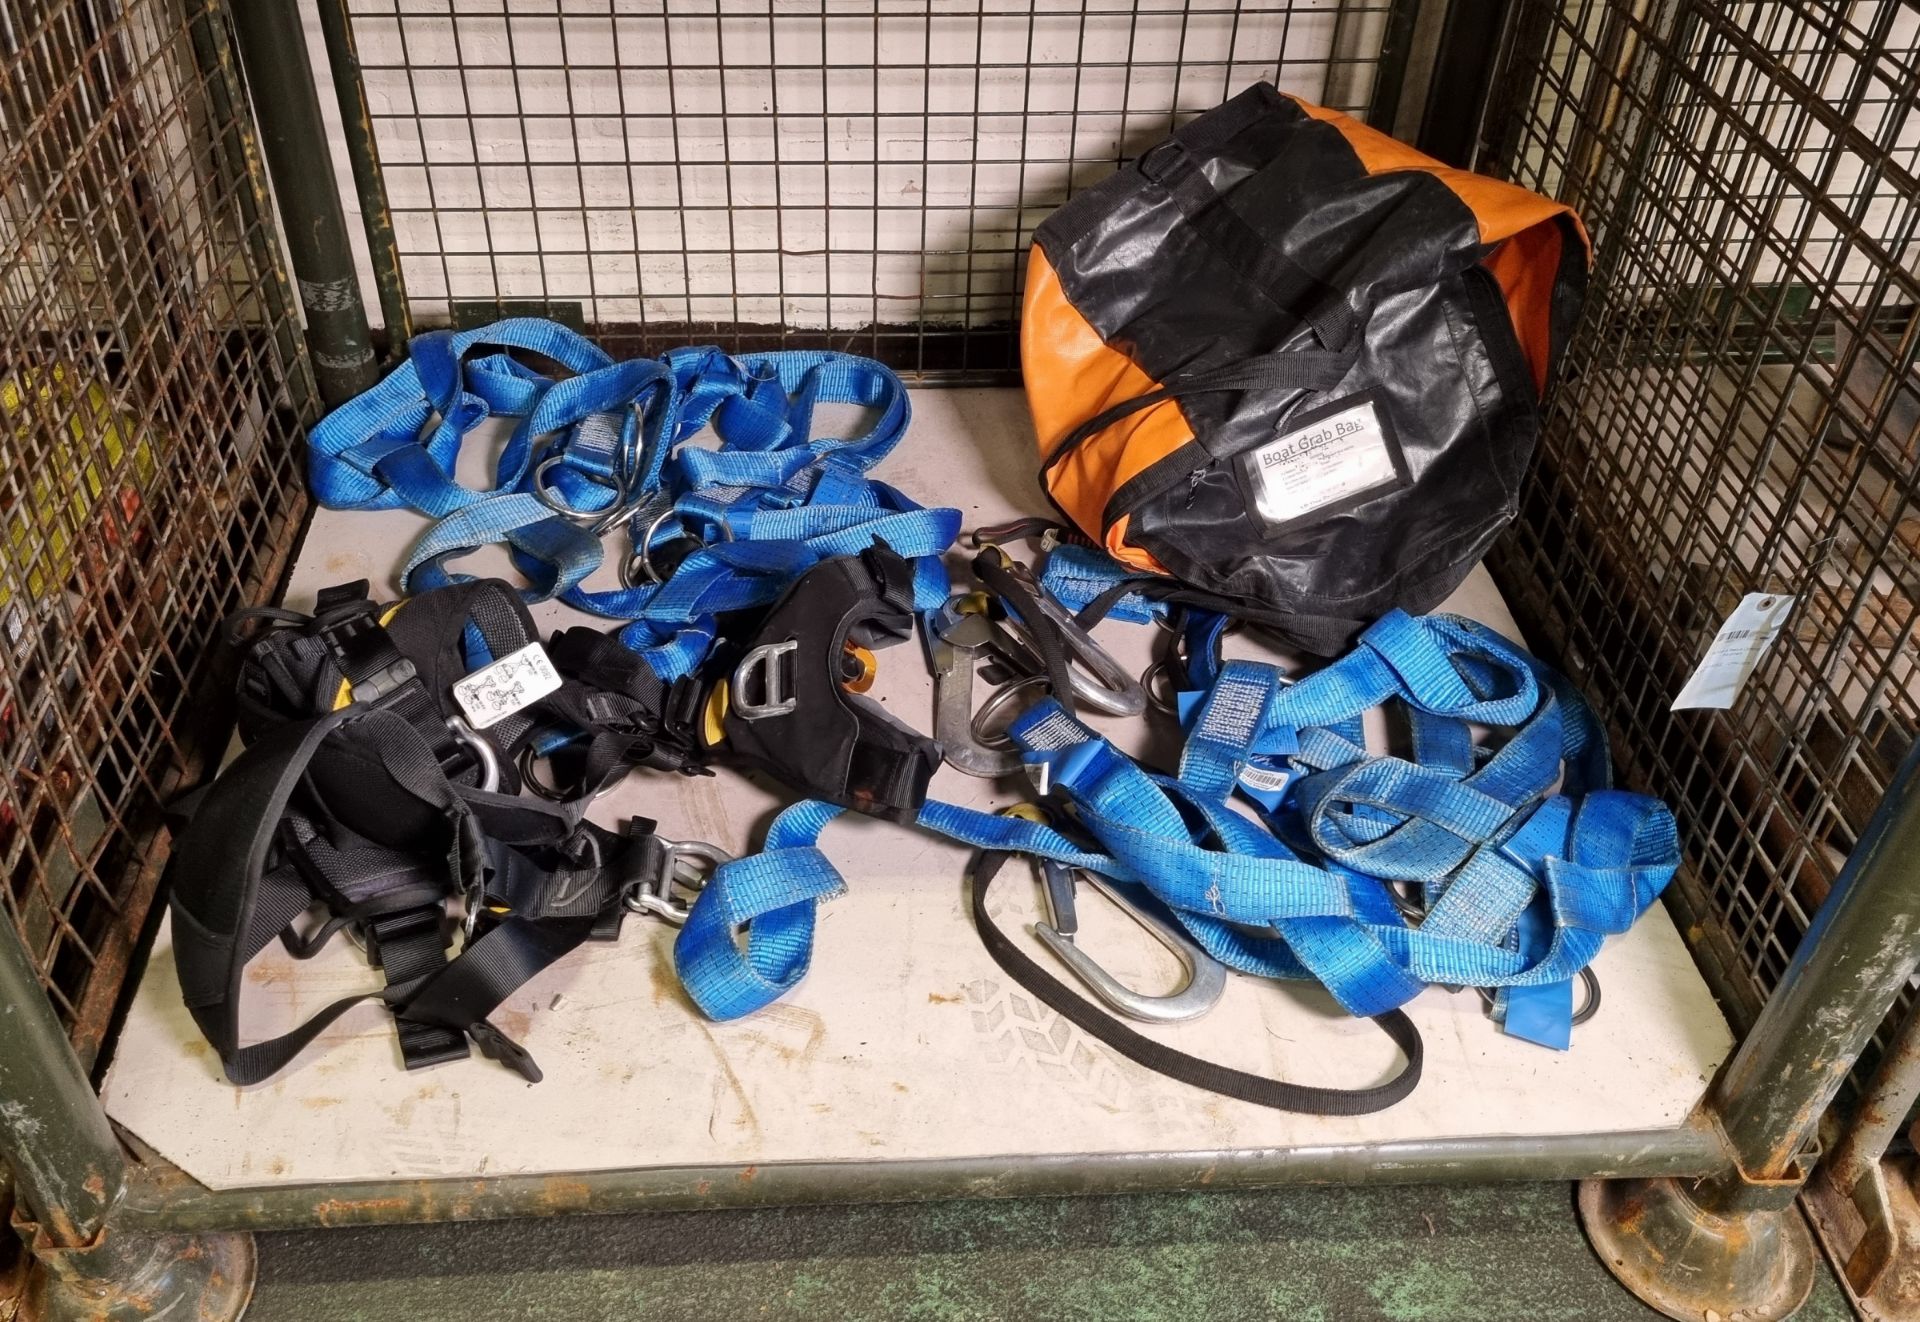 Survival & Rescue Climbing Equipment - boat grab bag, harnesses, animal rescue hobbles